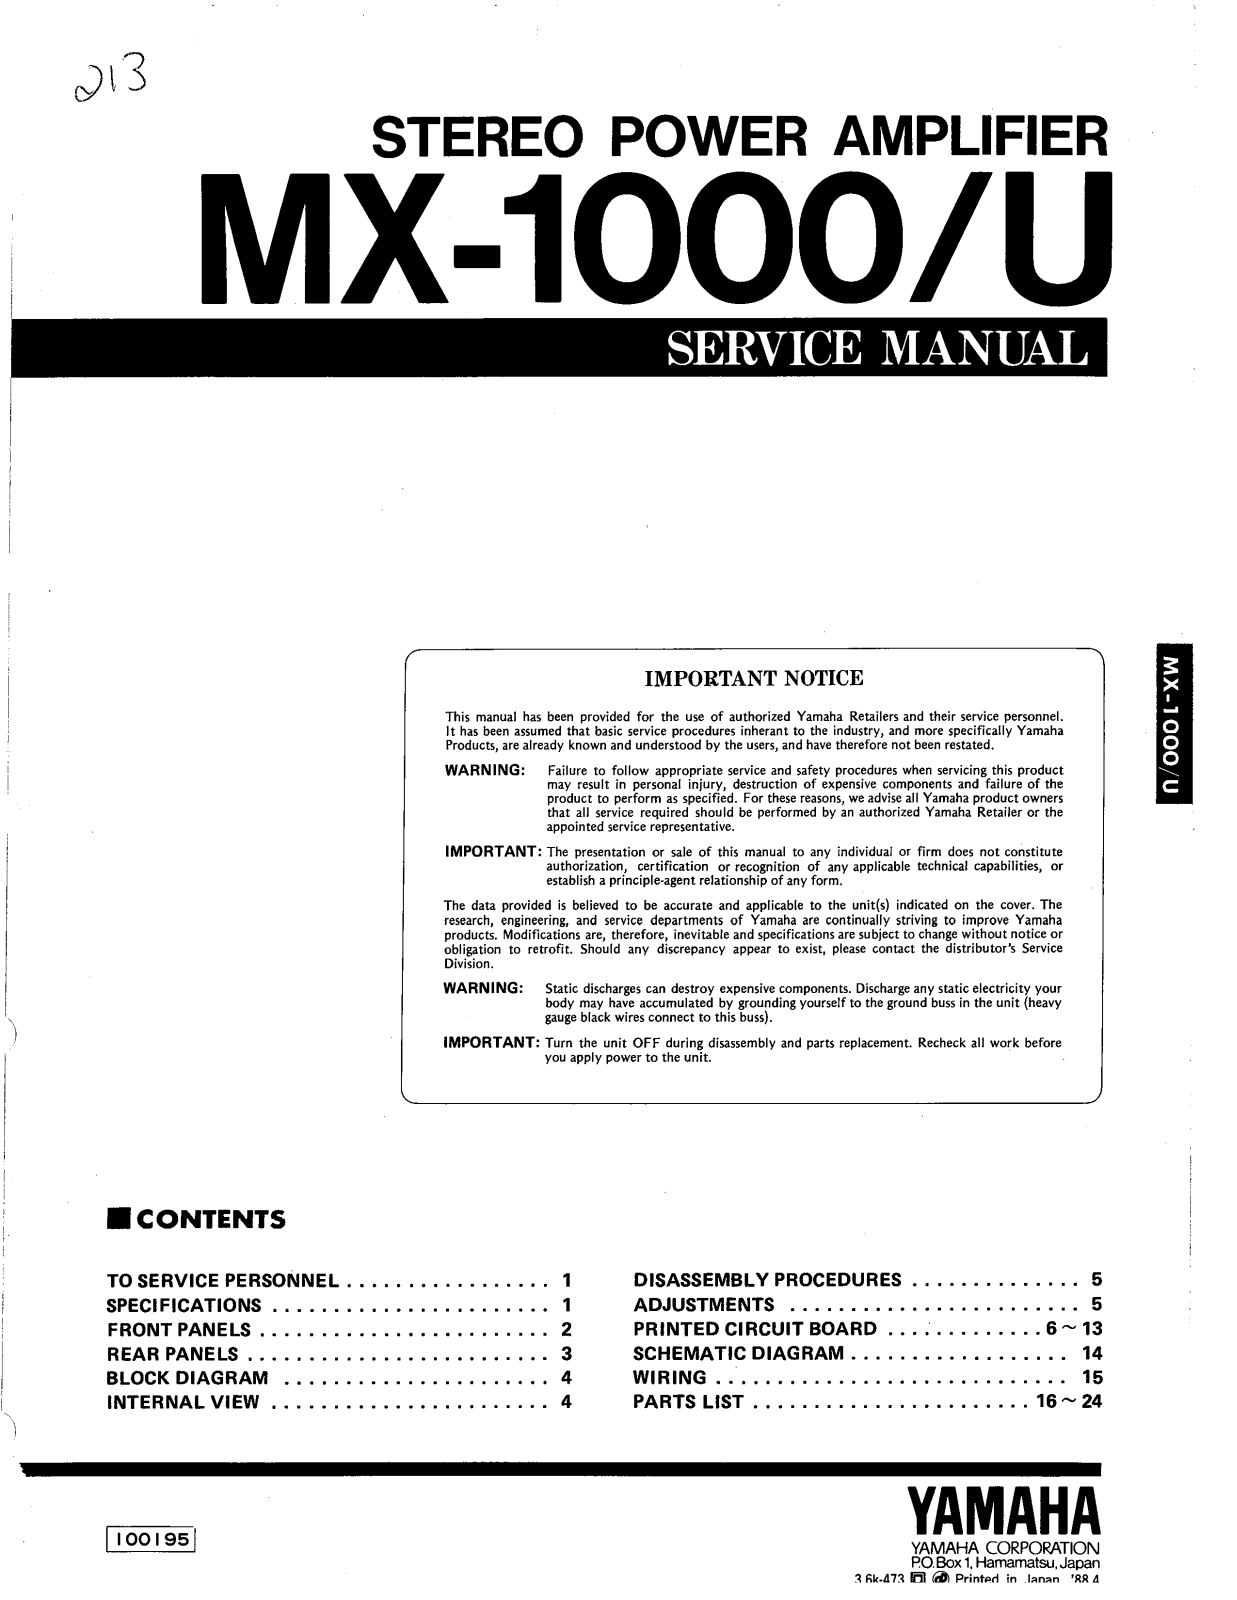 Yamaha MX-1000, MX-1000-U Service manual